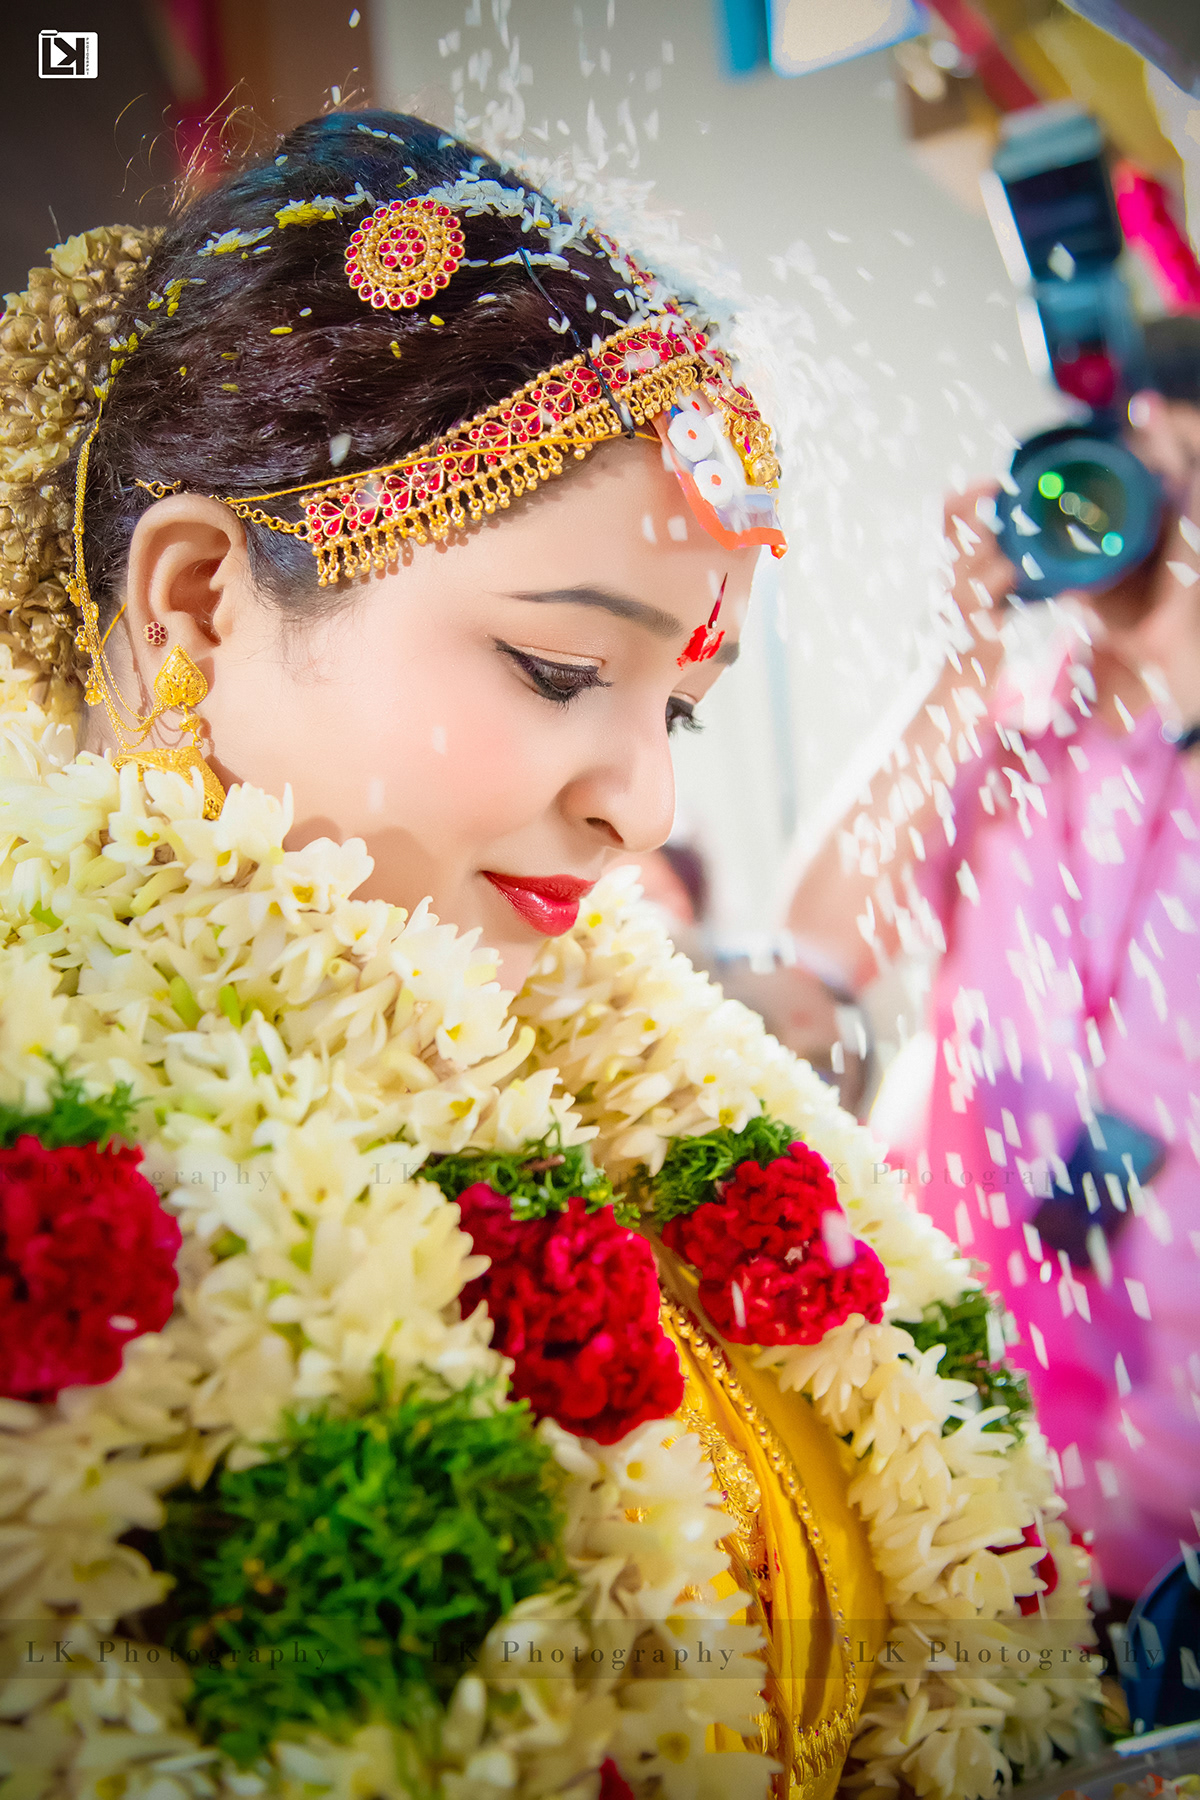 Candid Photography wedding phtography Lk photography lk chennai Chennai Photographer